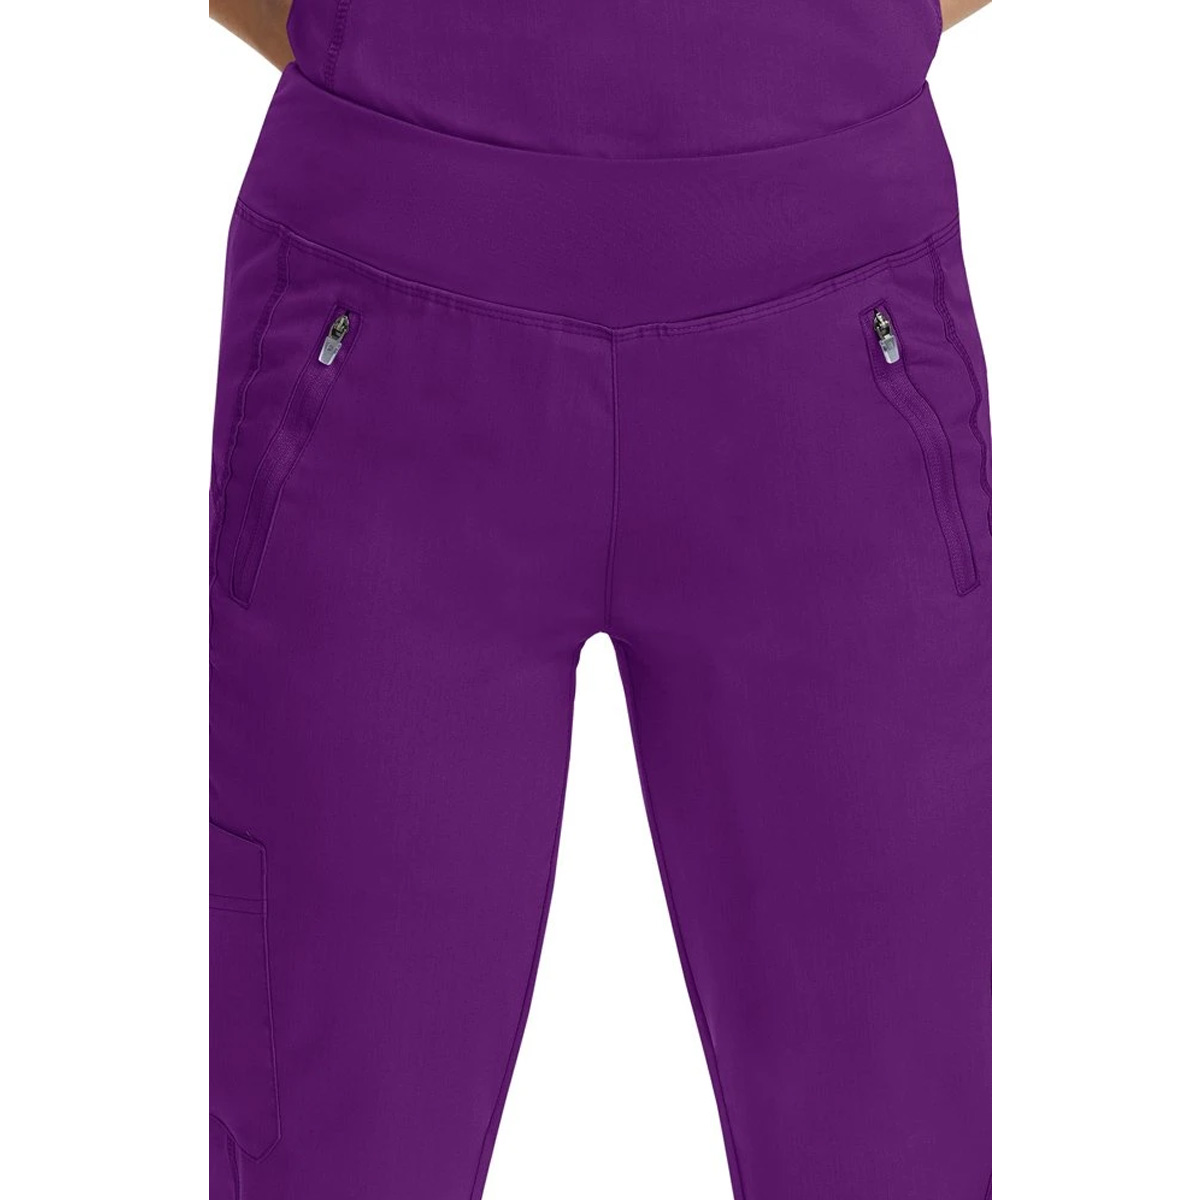 Healing Hands Purple Label Tori Yoga Pants (Tall Up to 2XL